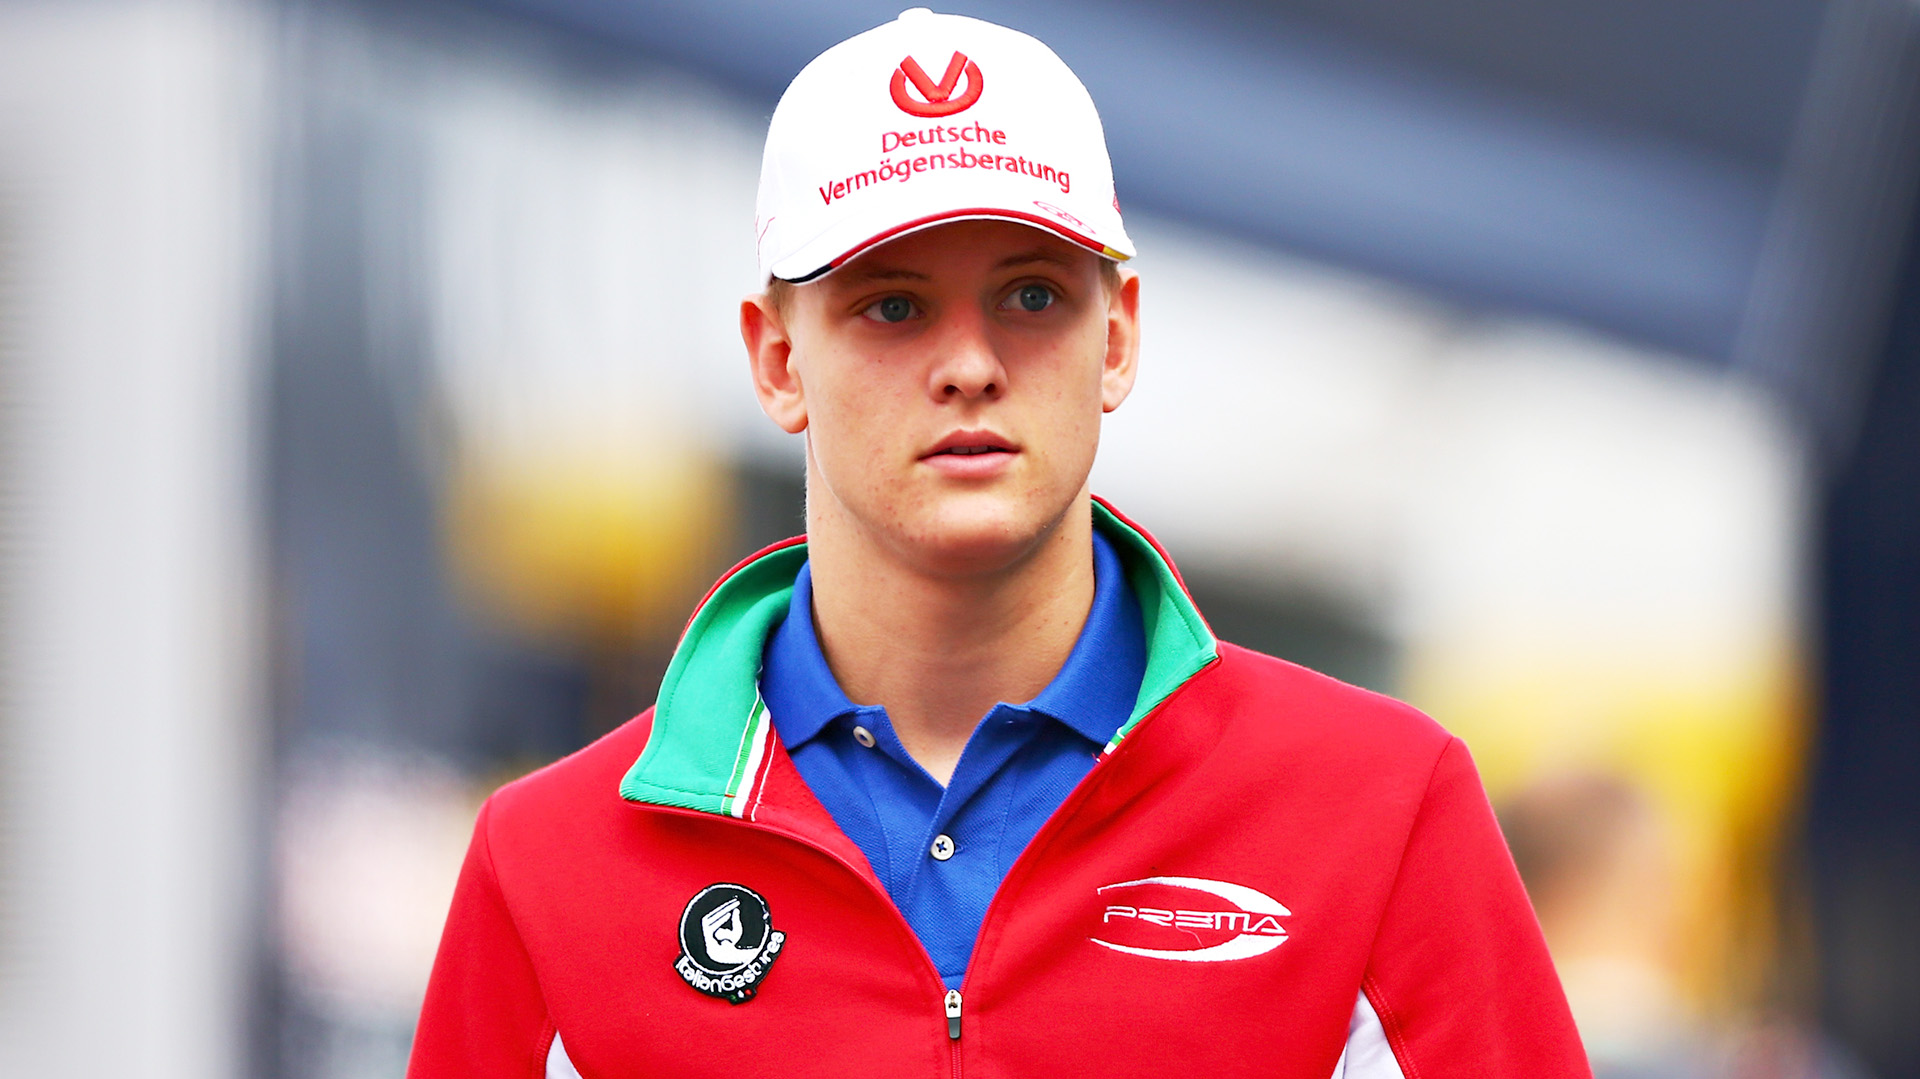 Mick Schumacher tiene muchas opciones en la Fórmula 1, incluso la Scuderia Ferrari (Getty Images)